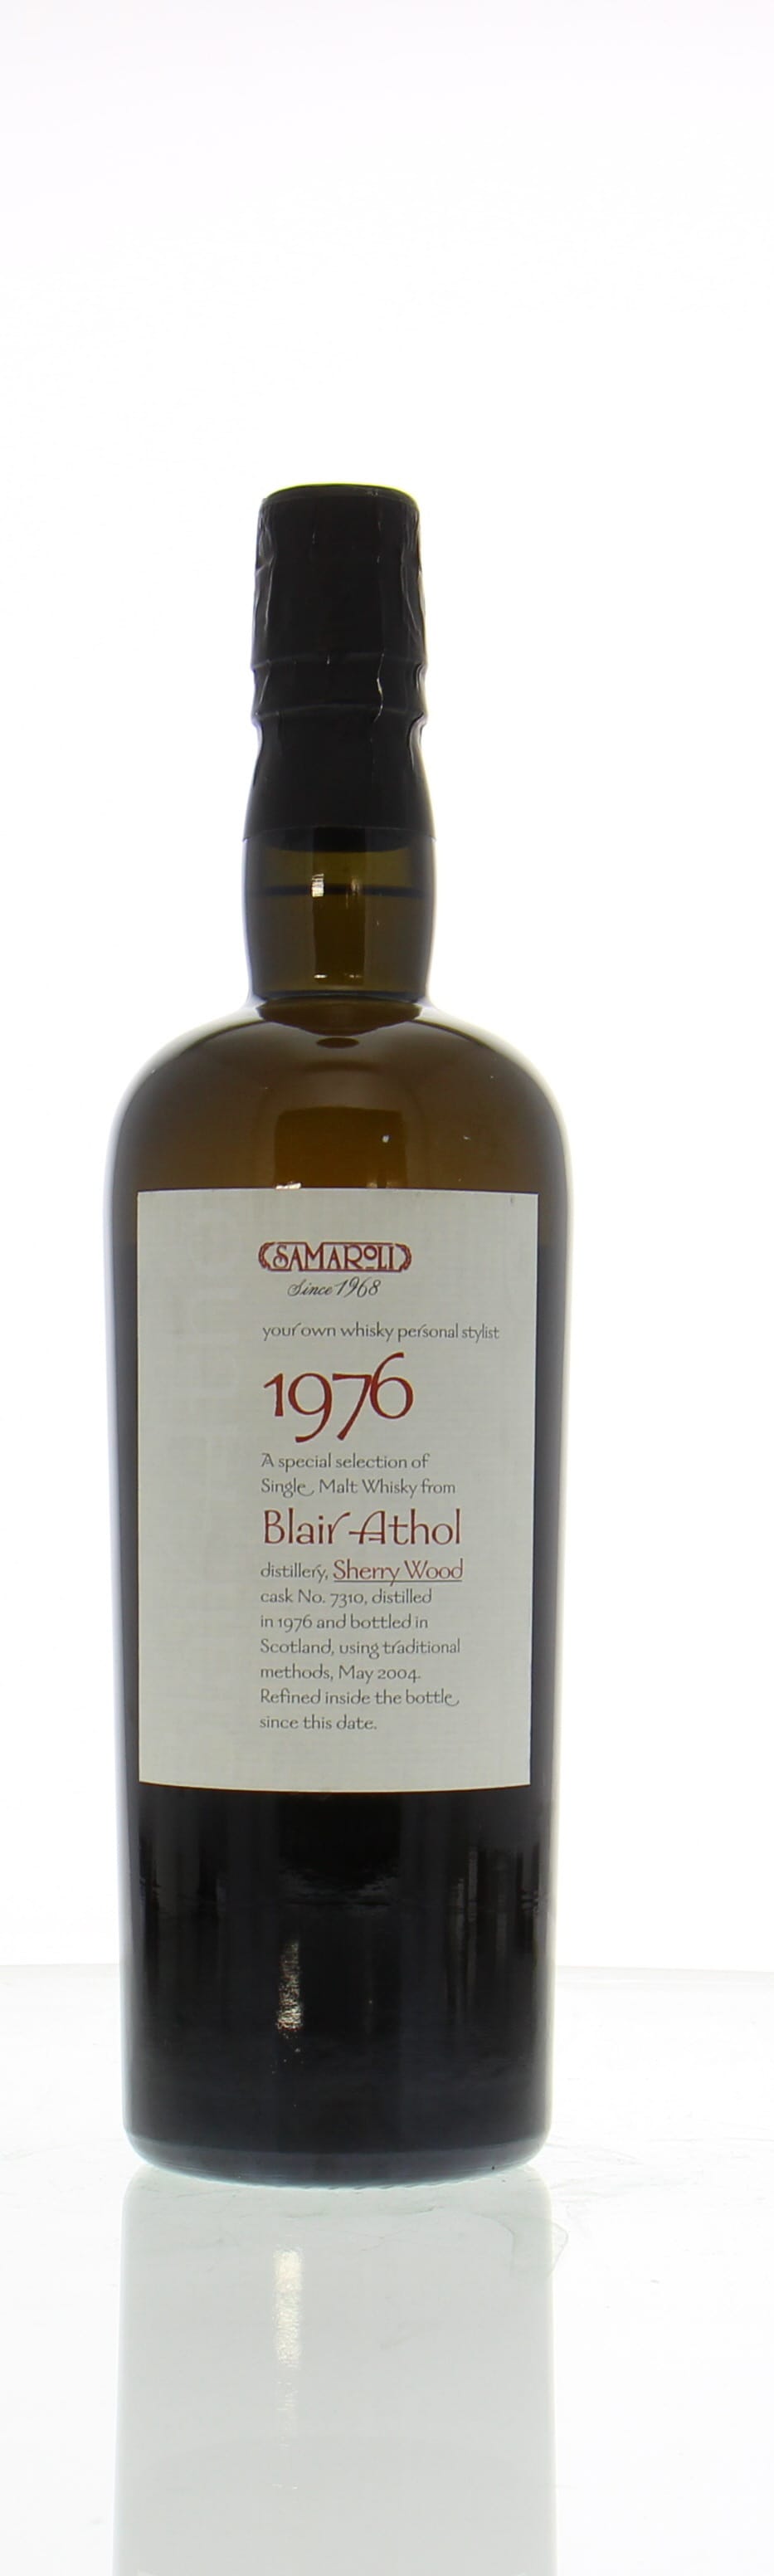 Blair Athol - 1976 Samaroli 35th Anniversary Cask: 7310 45% 1976 NO BOX INCLUDED